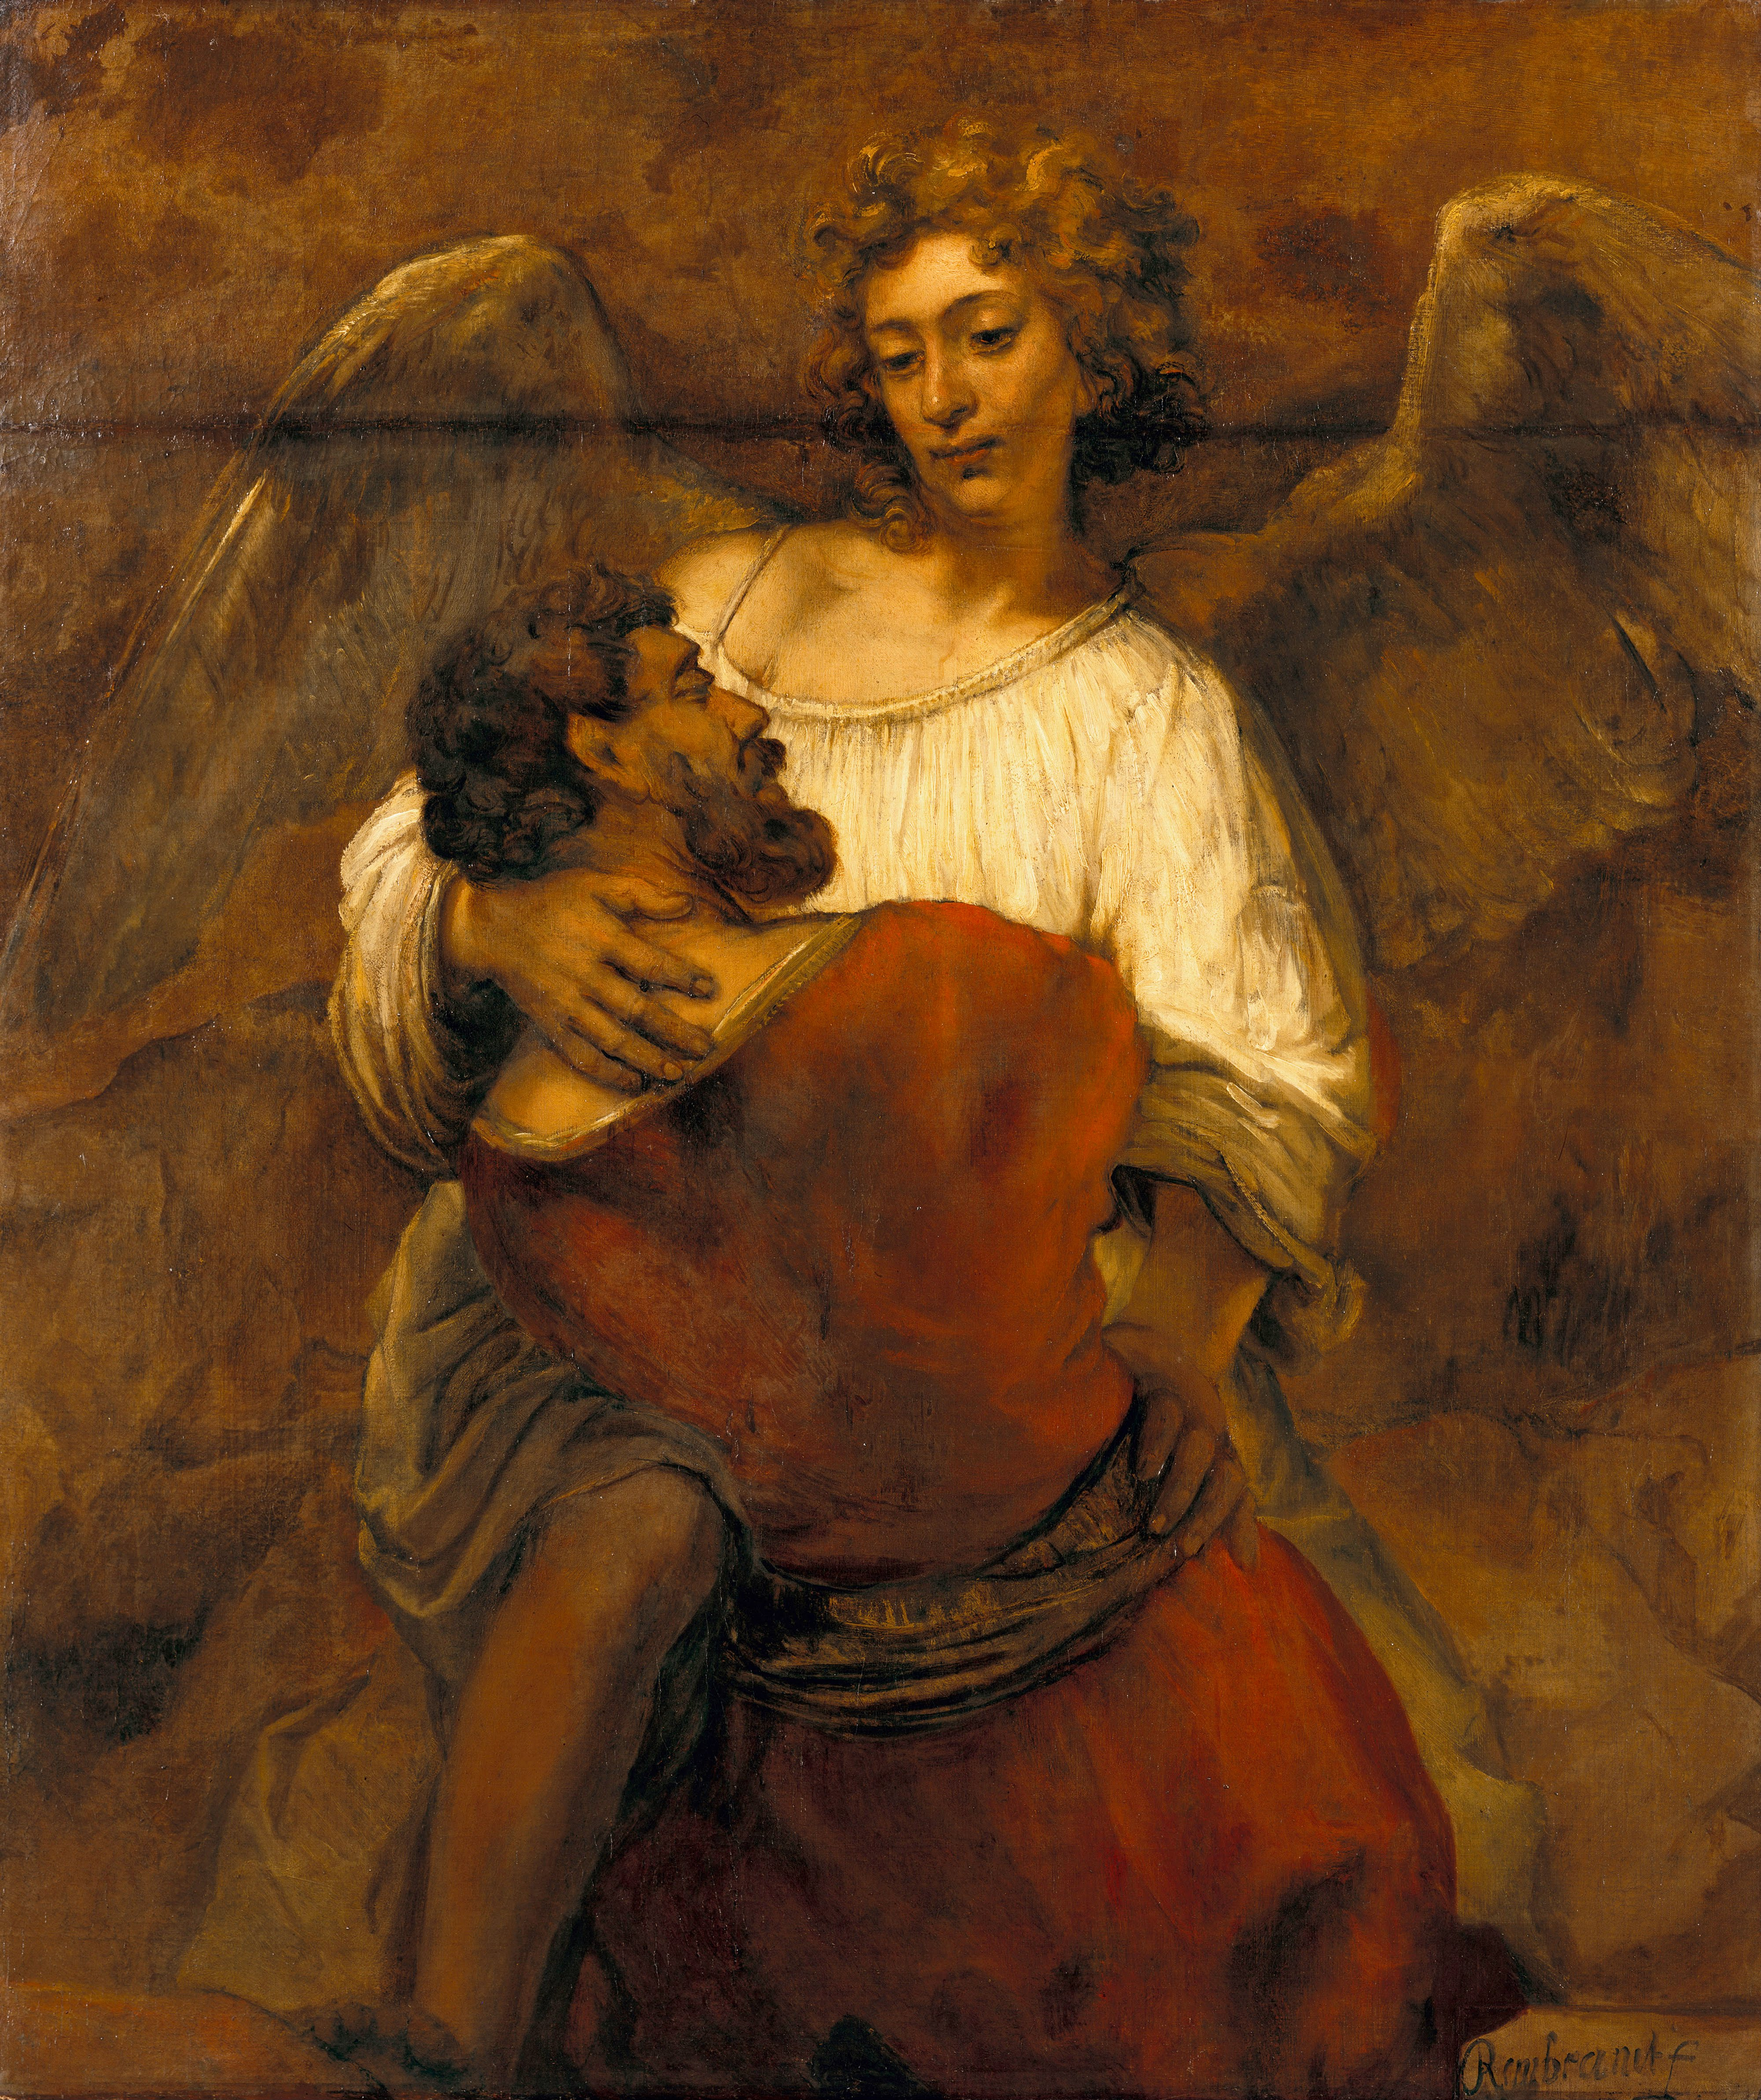 Jacob Wrestling with the Angel by Rembrandt van Rijn - c. 1659 - 137 x 116 cm Gemäldegalerie